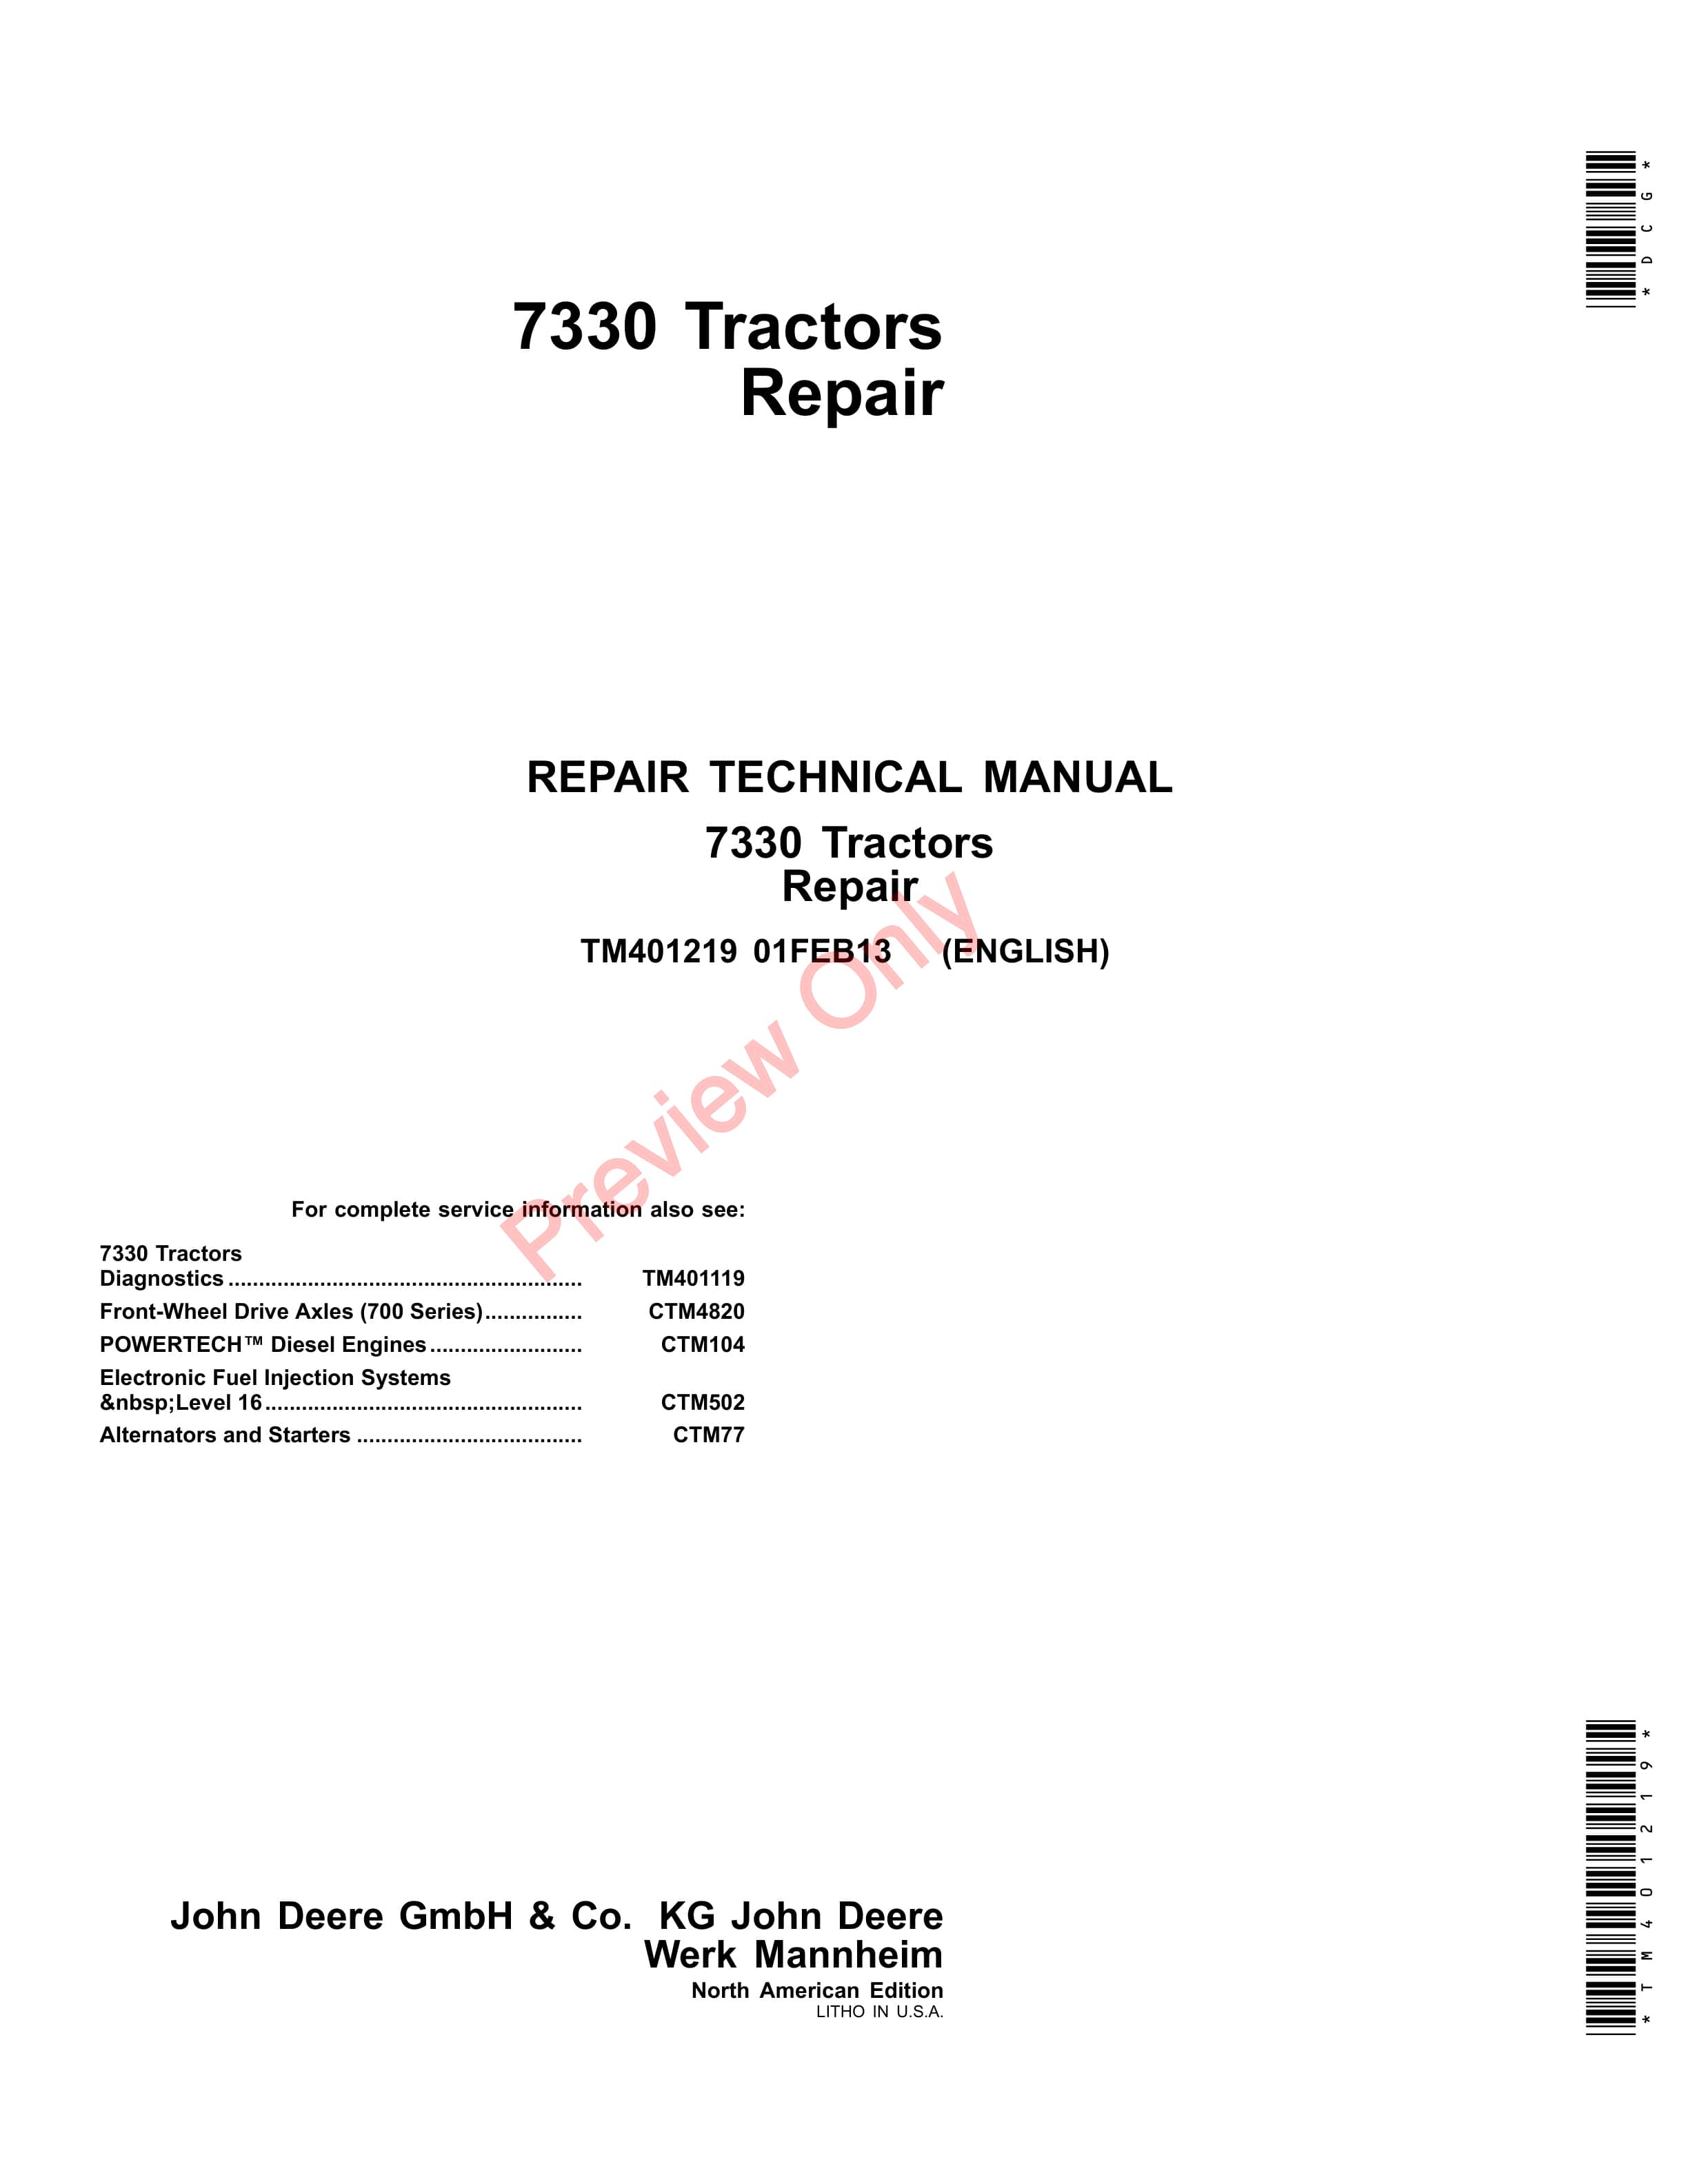 John Deere 7330 Tractors Technical Manual TM401219 01FEB13 1